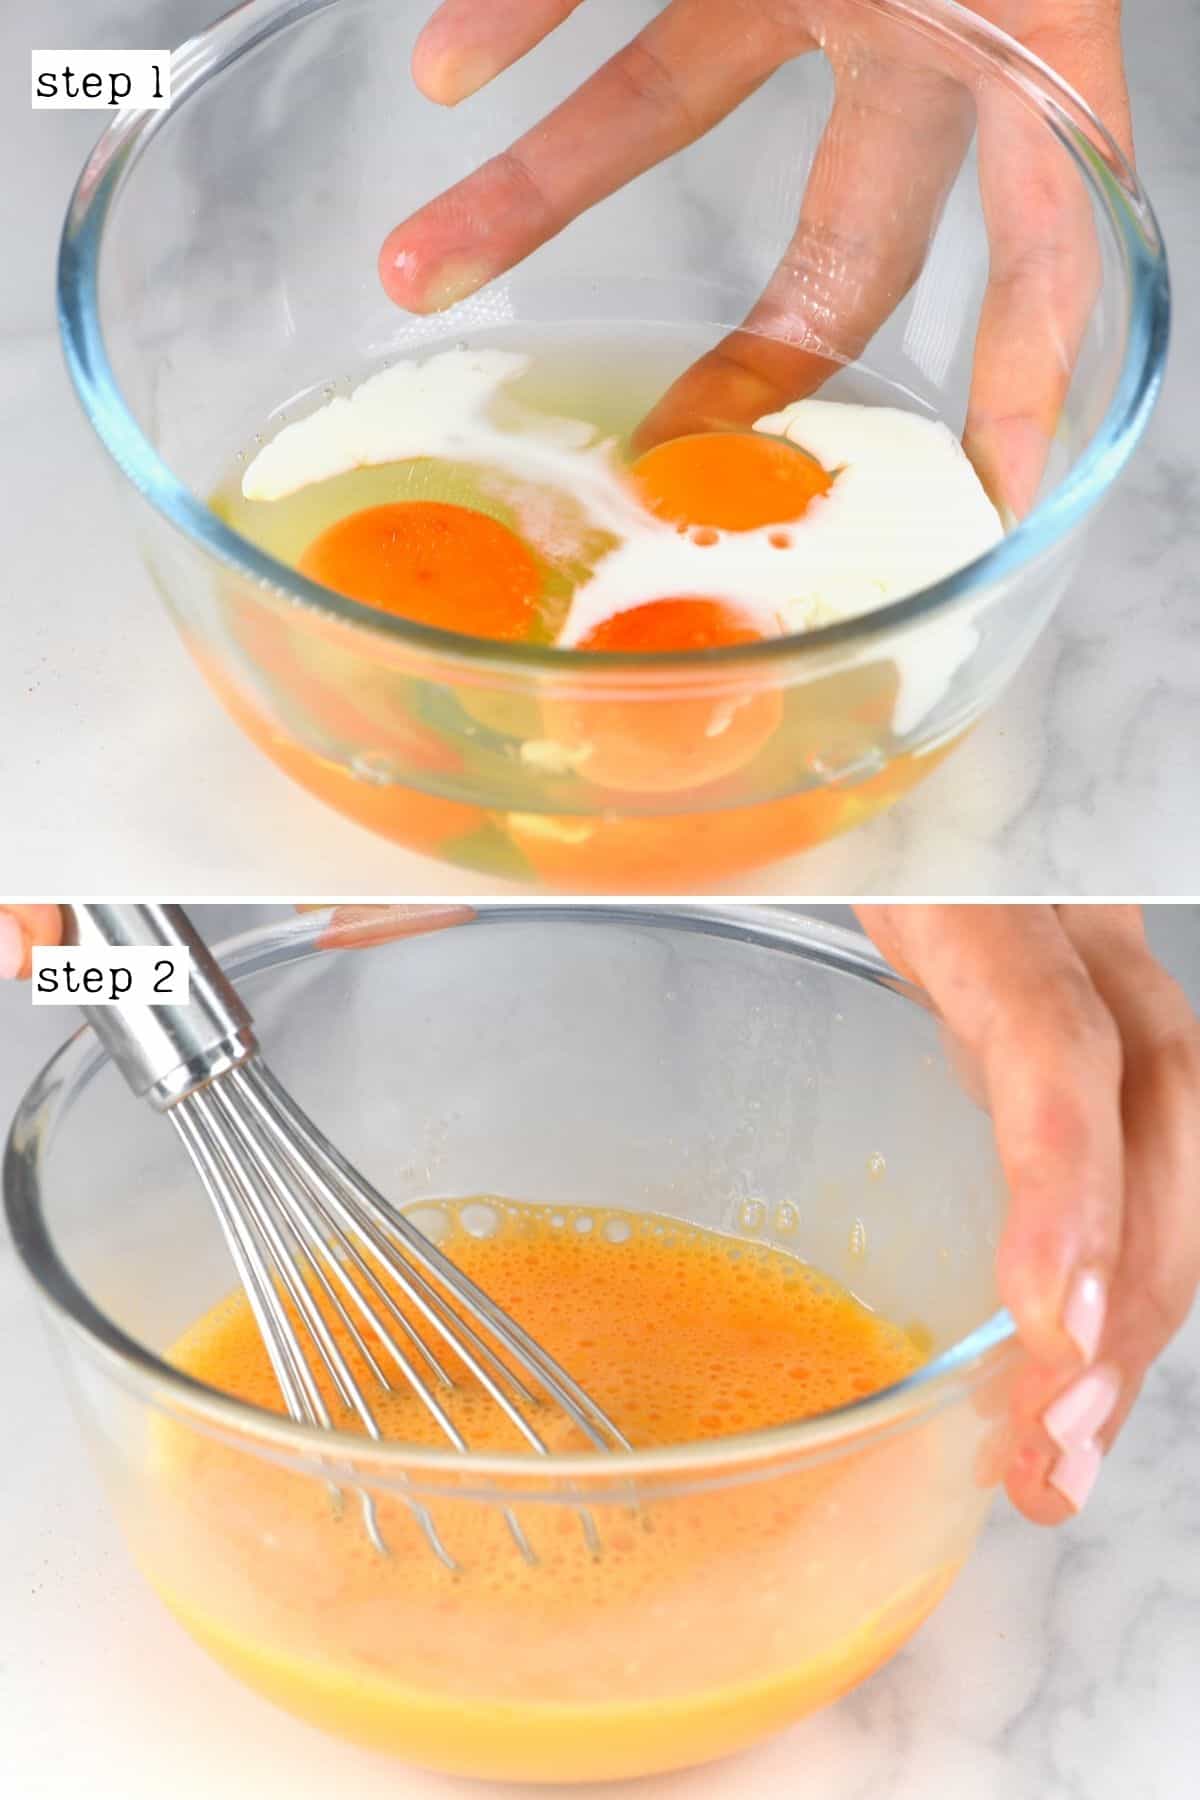 Steps for preparing scrambled eggs